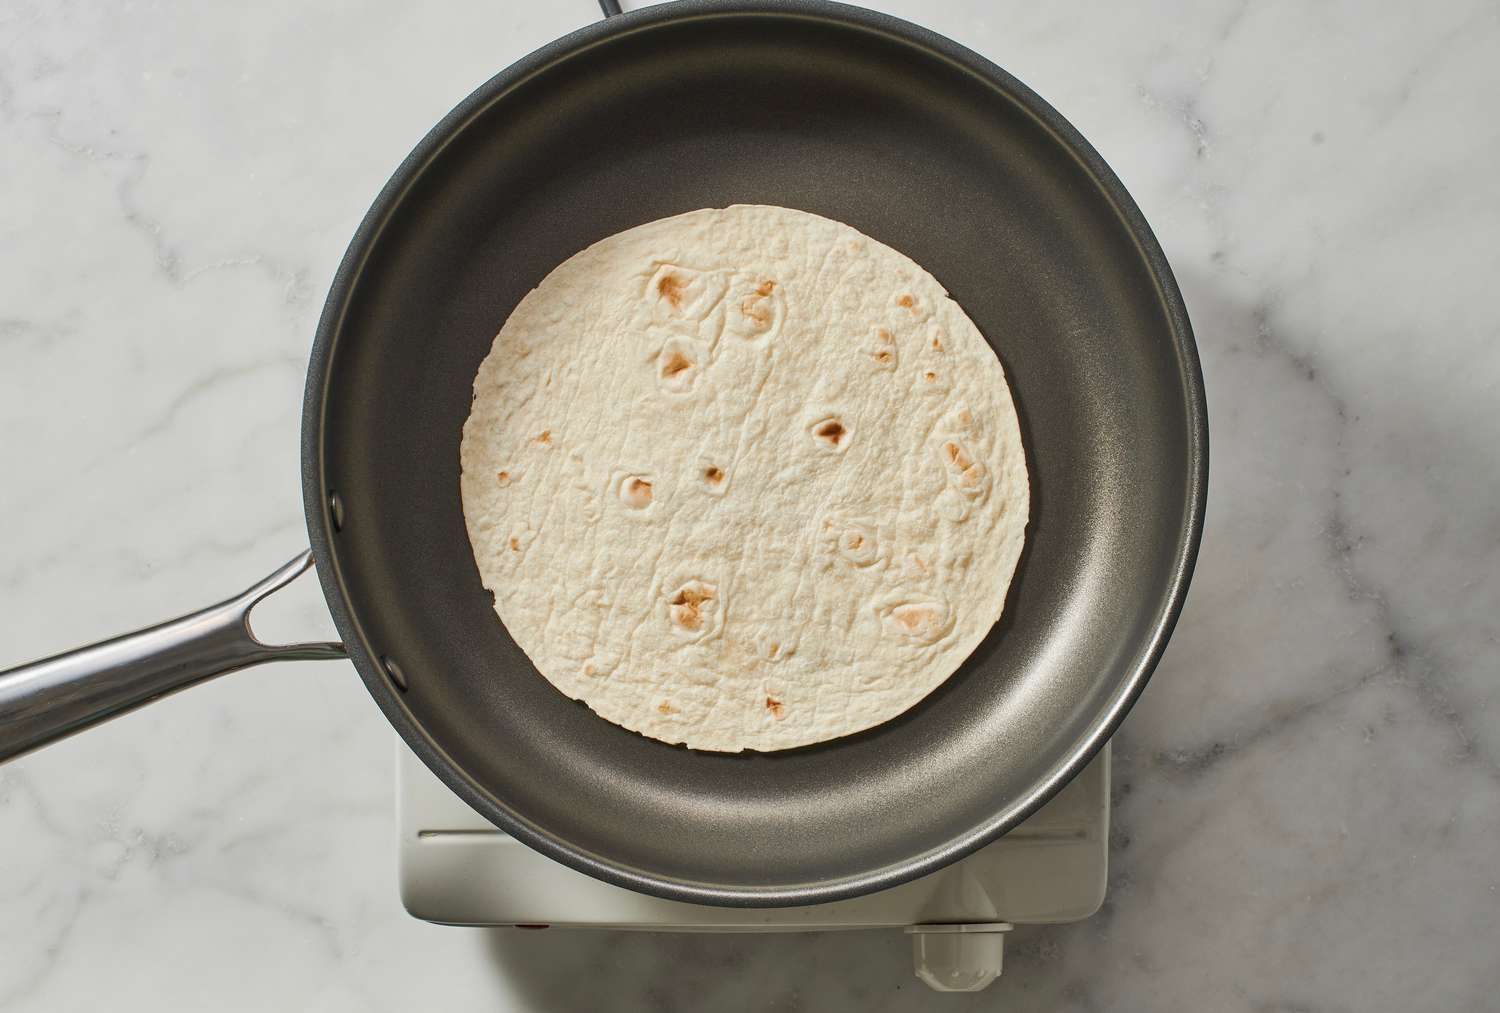 A tortilla in a skillet